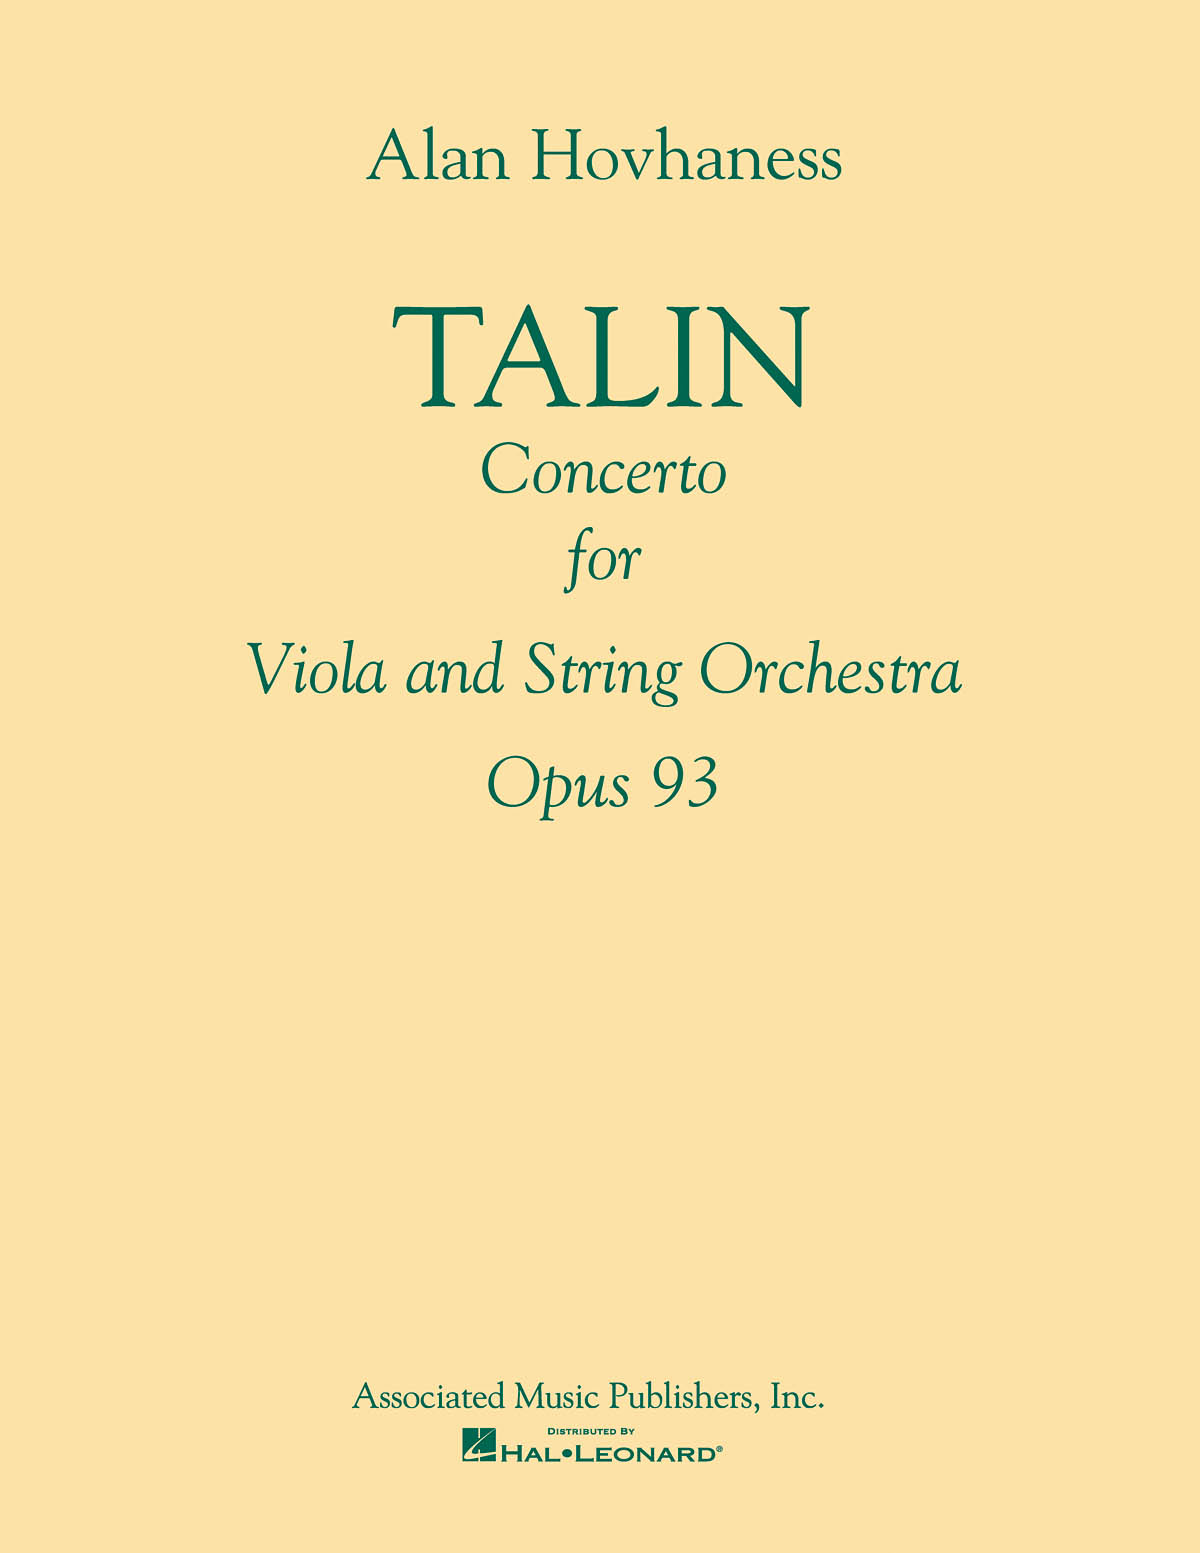 Alan Hovhaness: Talin Concerto, Op. 93